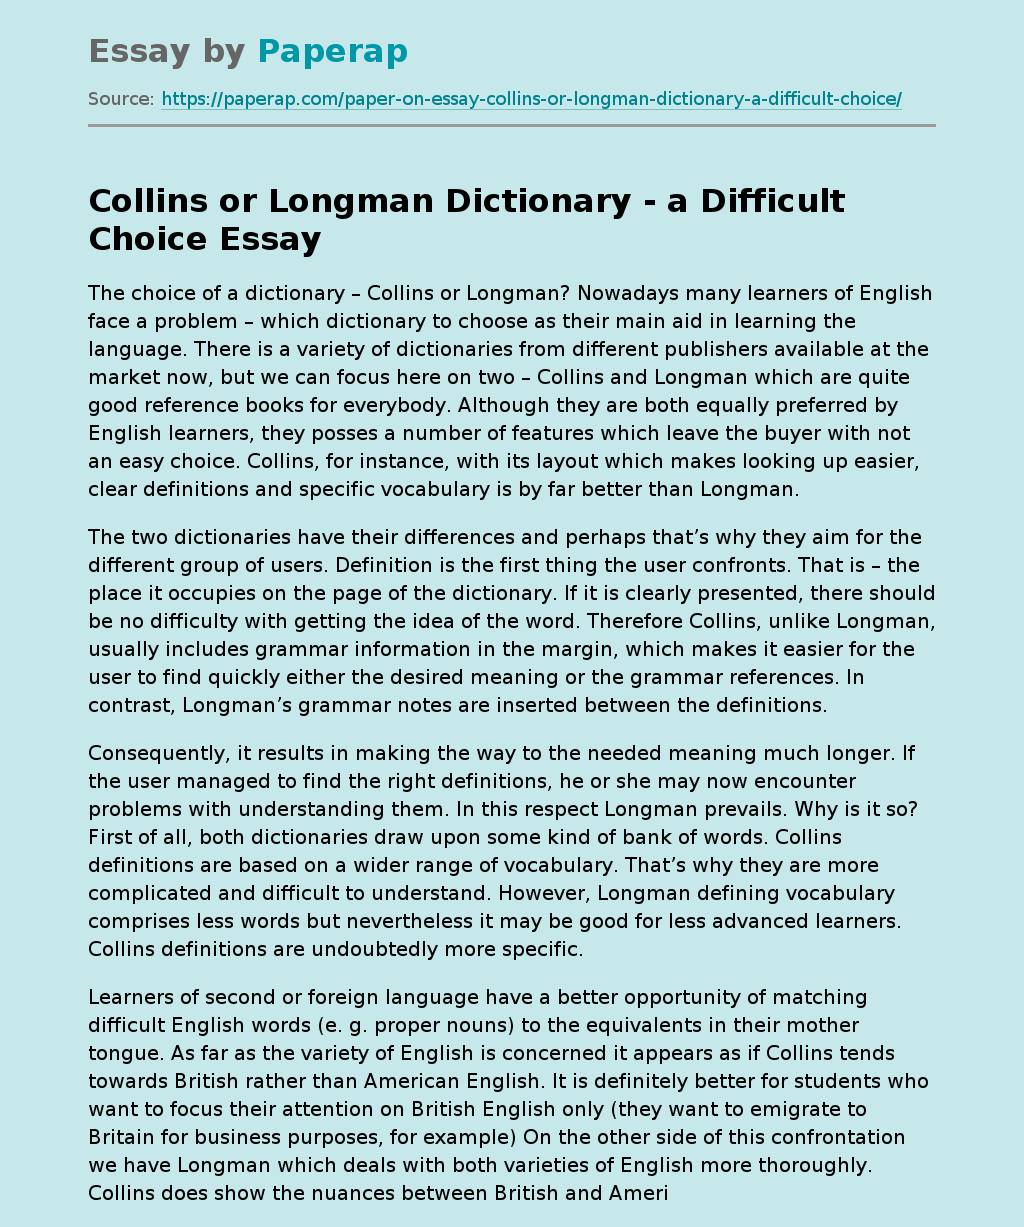 Collins or Longman Dictionary - a Difficult Choice